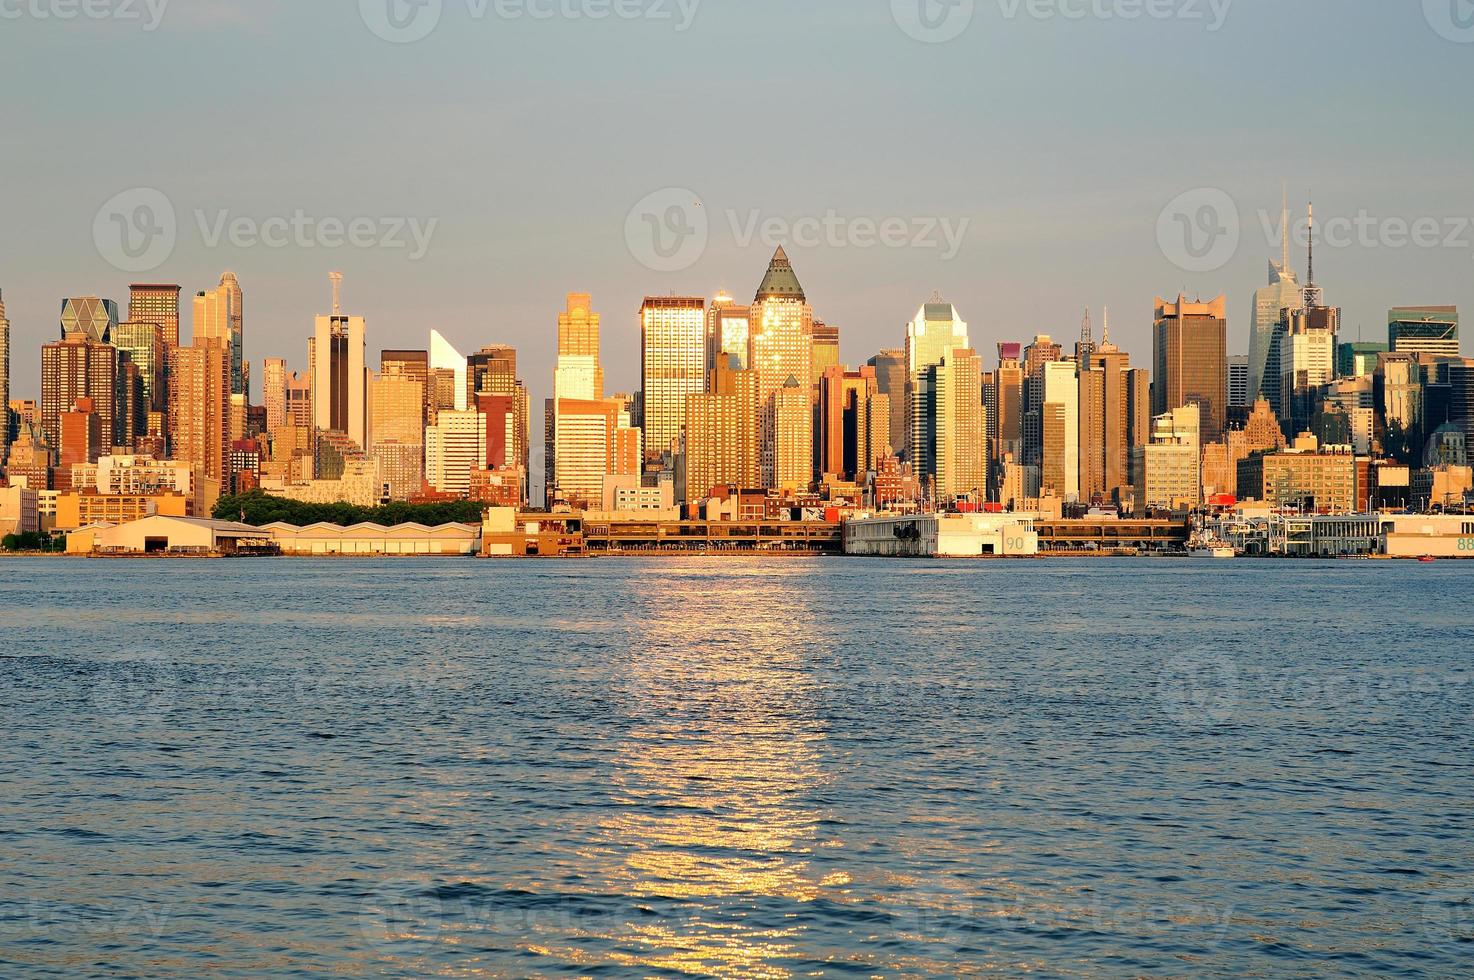 New York City Manhattan bij zonsondergang over Hudson River foto